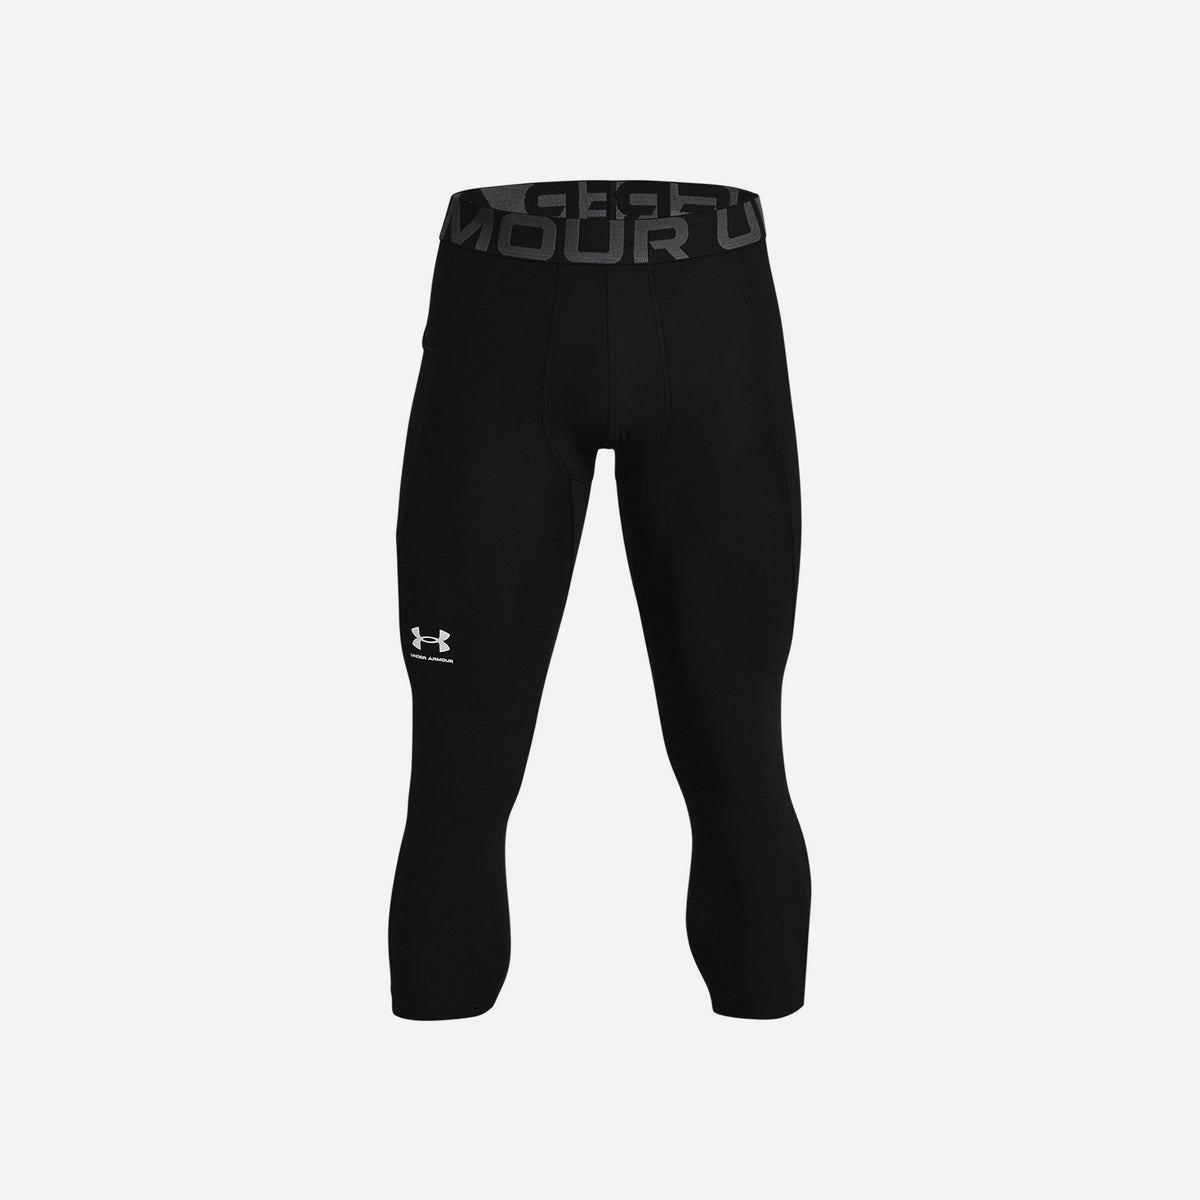 Men's Black Under Armour 3/4 Spandex Tights Compression Pants